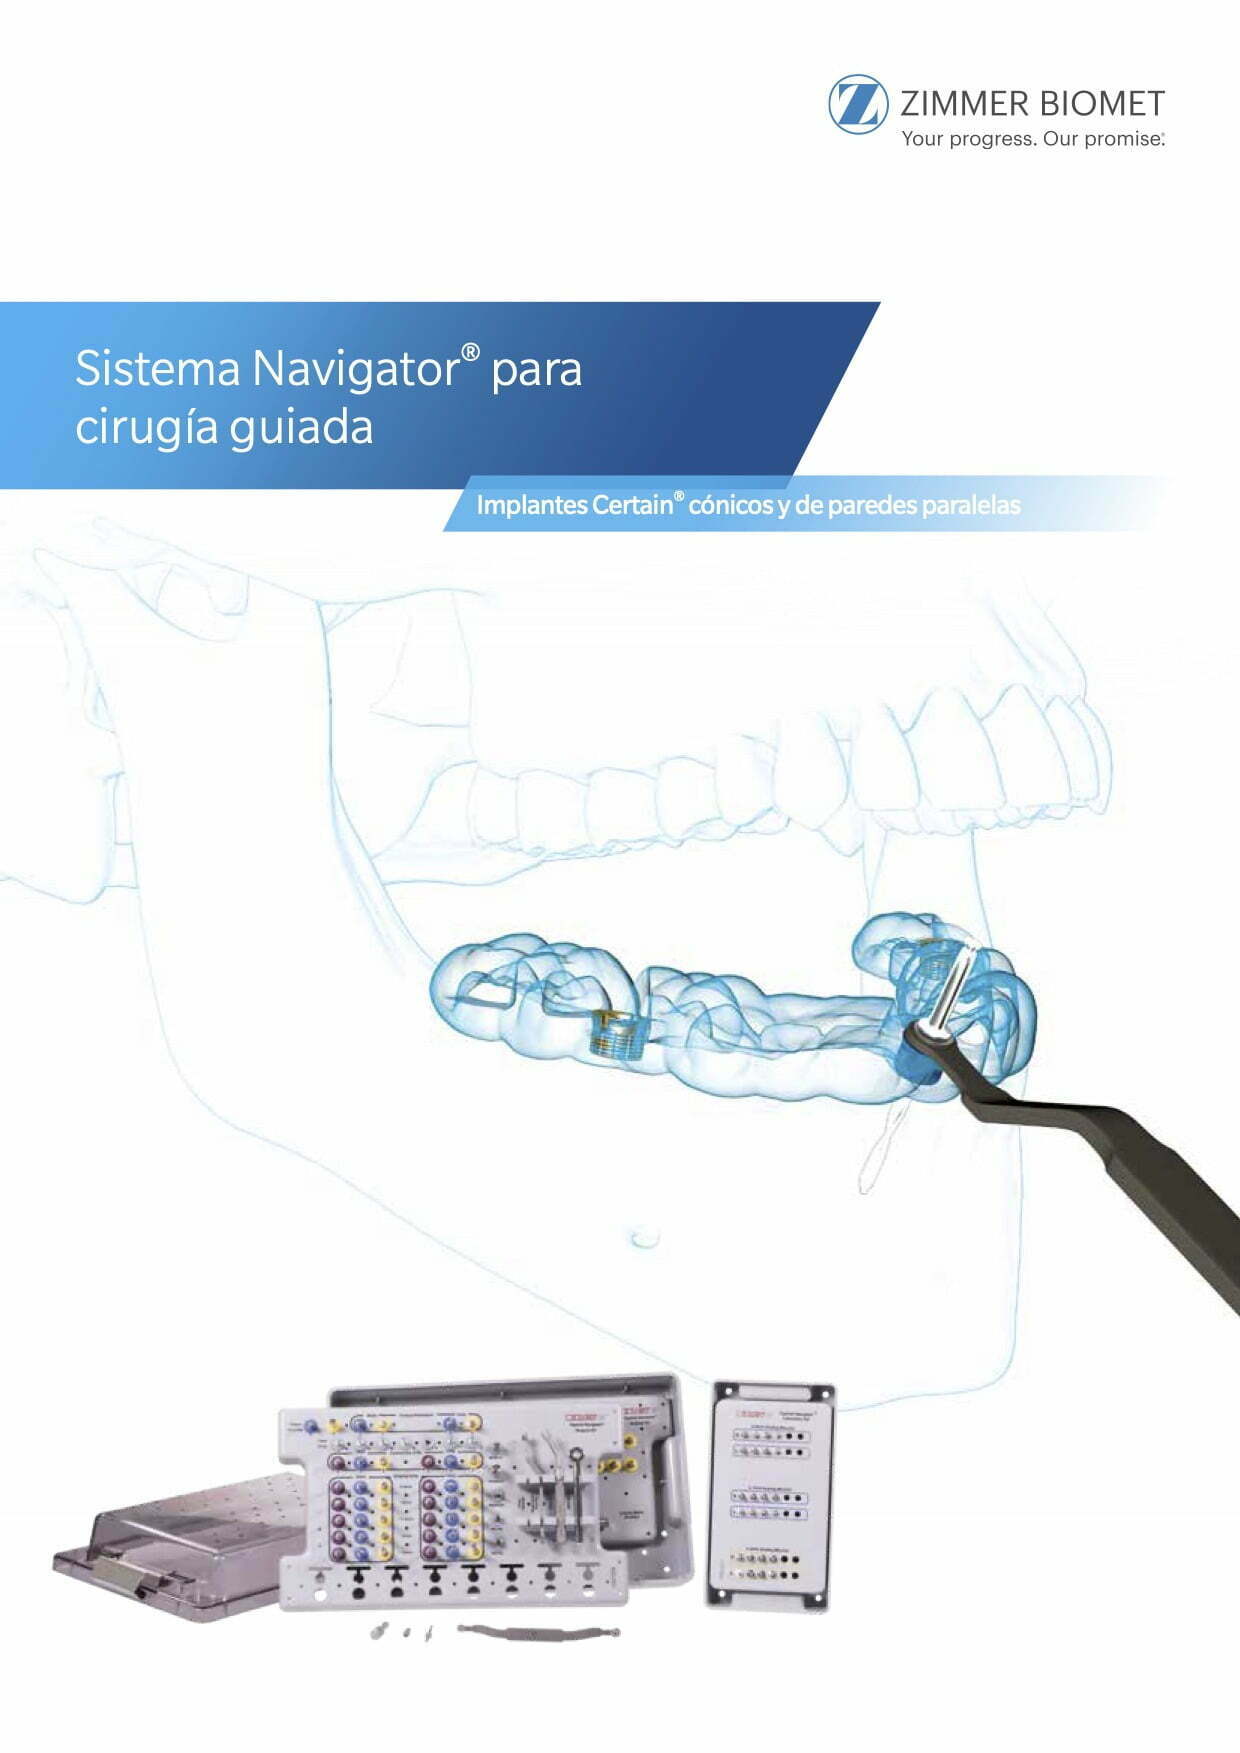 Sistema Navigator® para tratamiento implantológico mediante cirugía guiada